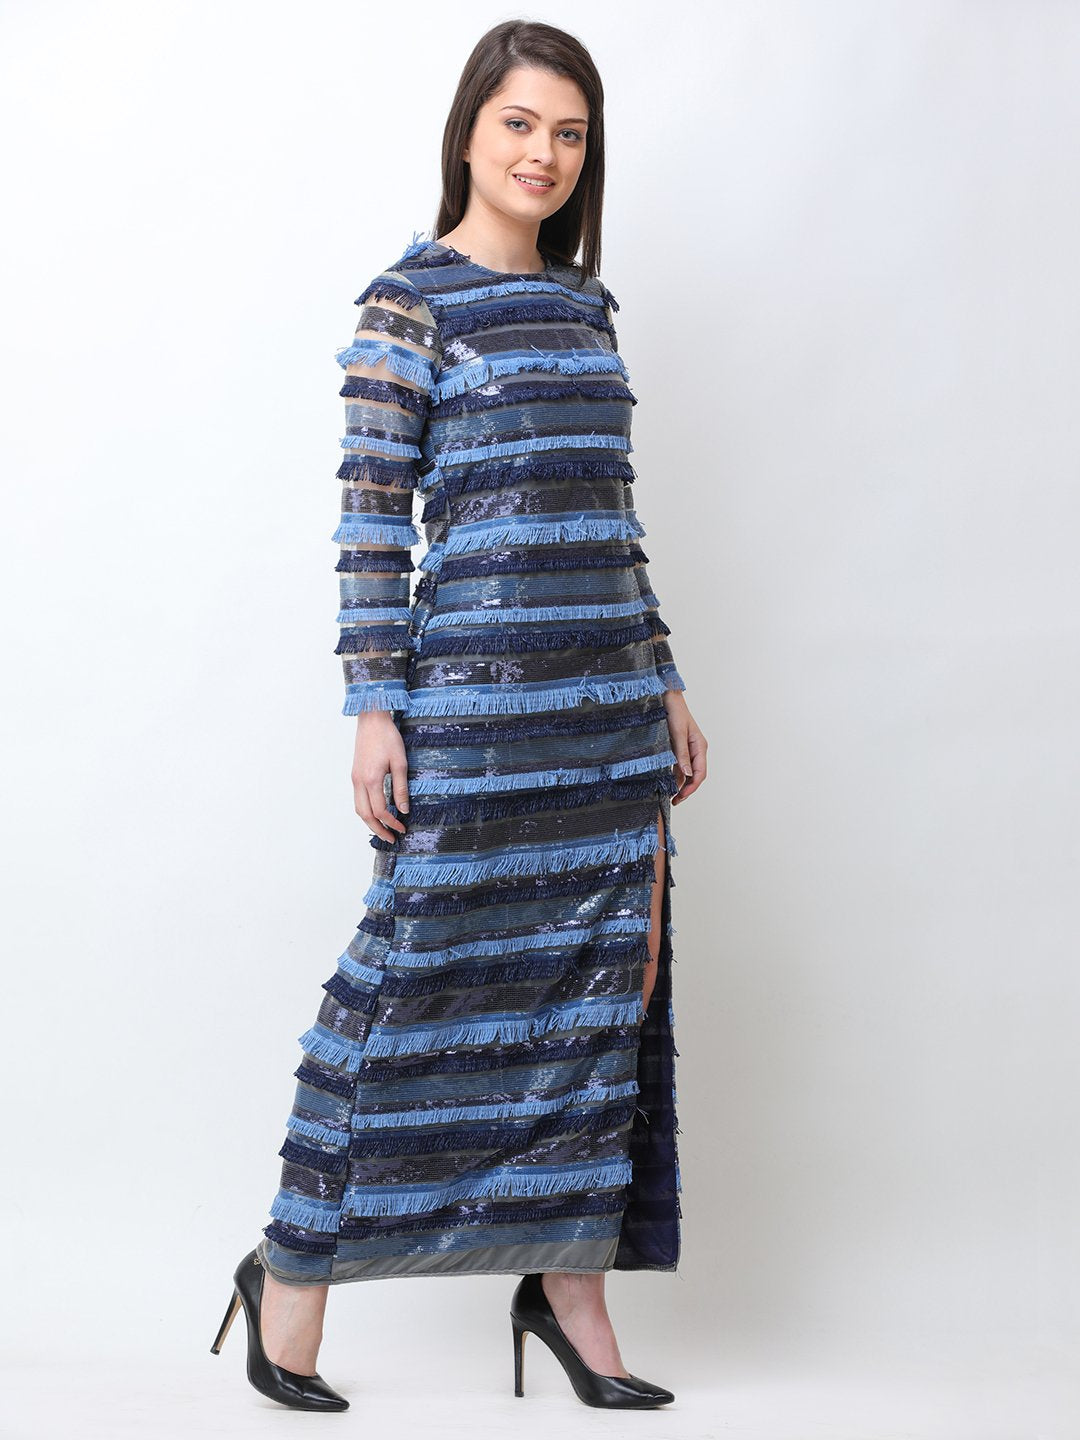 Scorpius Blue front cut sequin dress